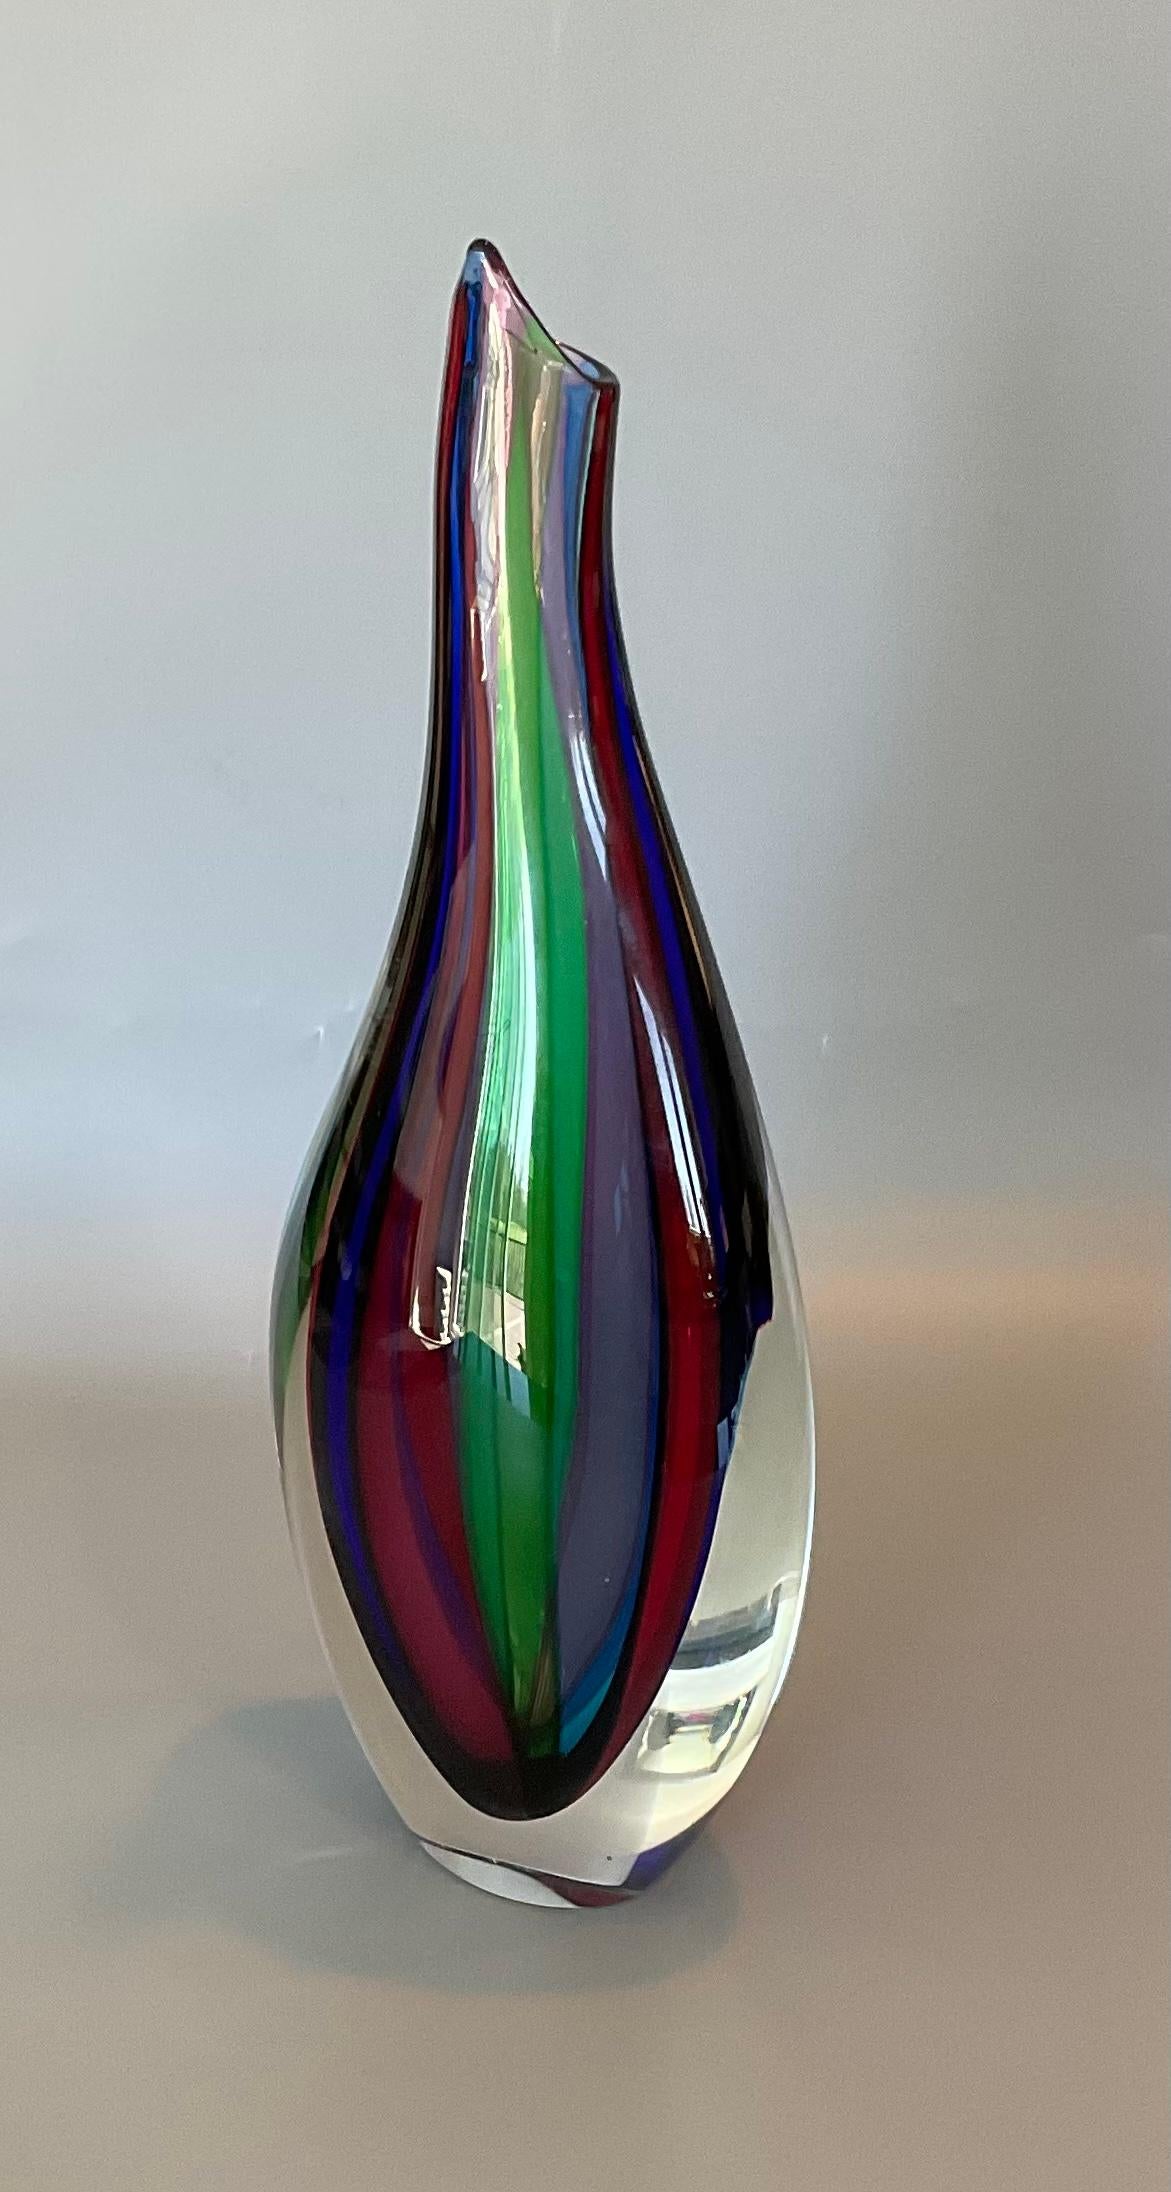 Giuliani Mian Murano Art Glass Vase Striped Multi Color Signed by the Artist In Good Condition For Sale In Ann Arbor, MI